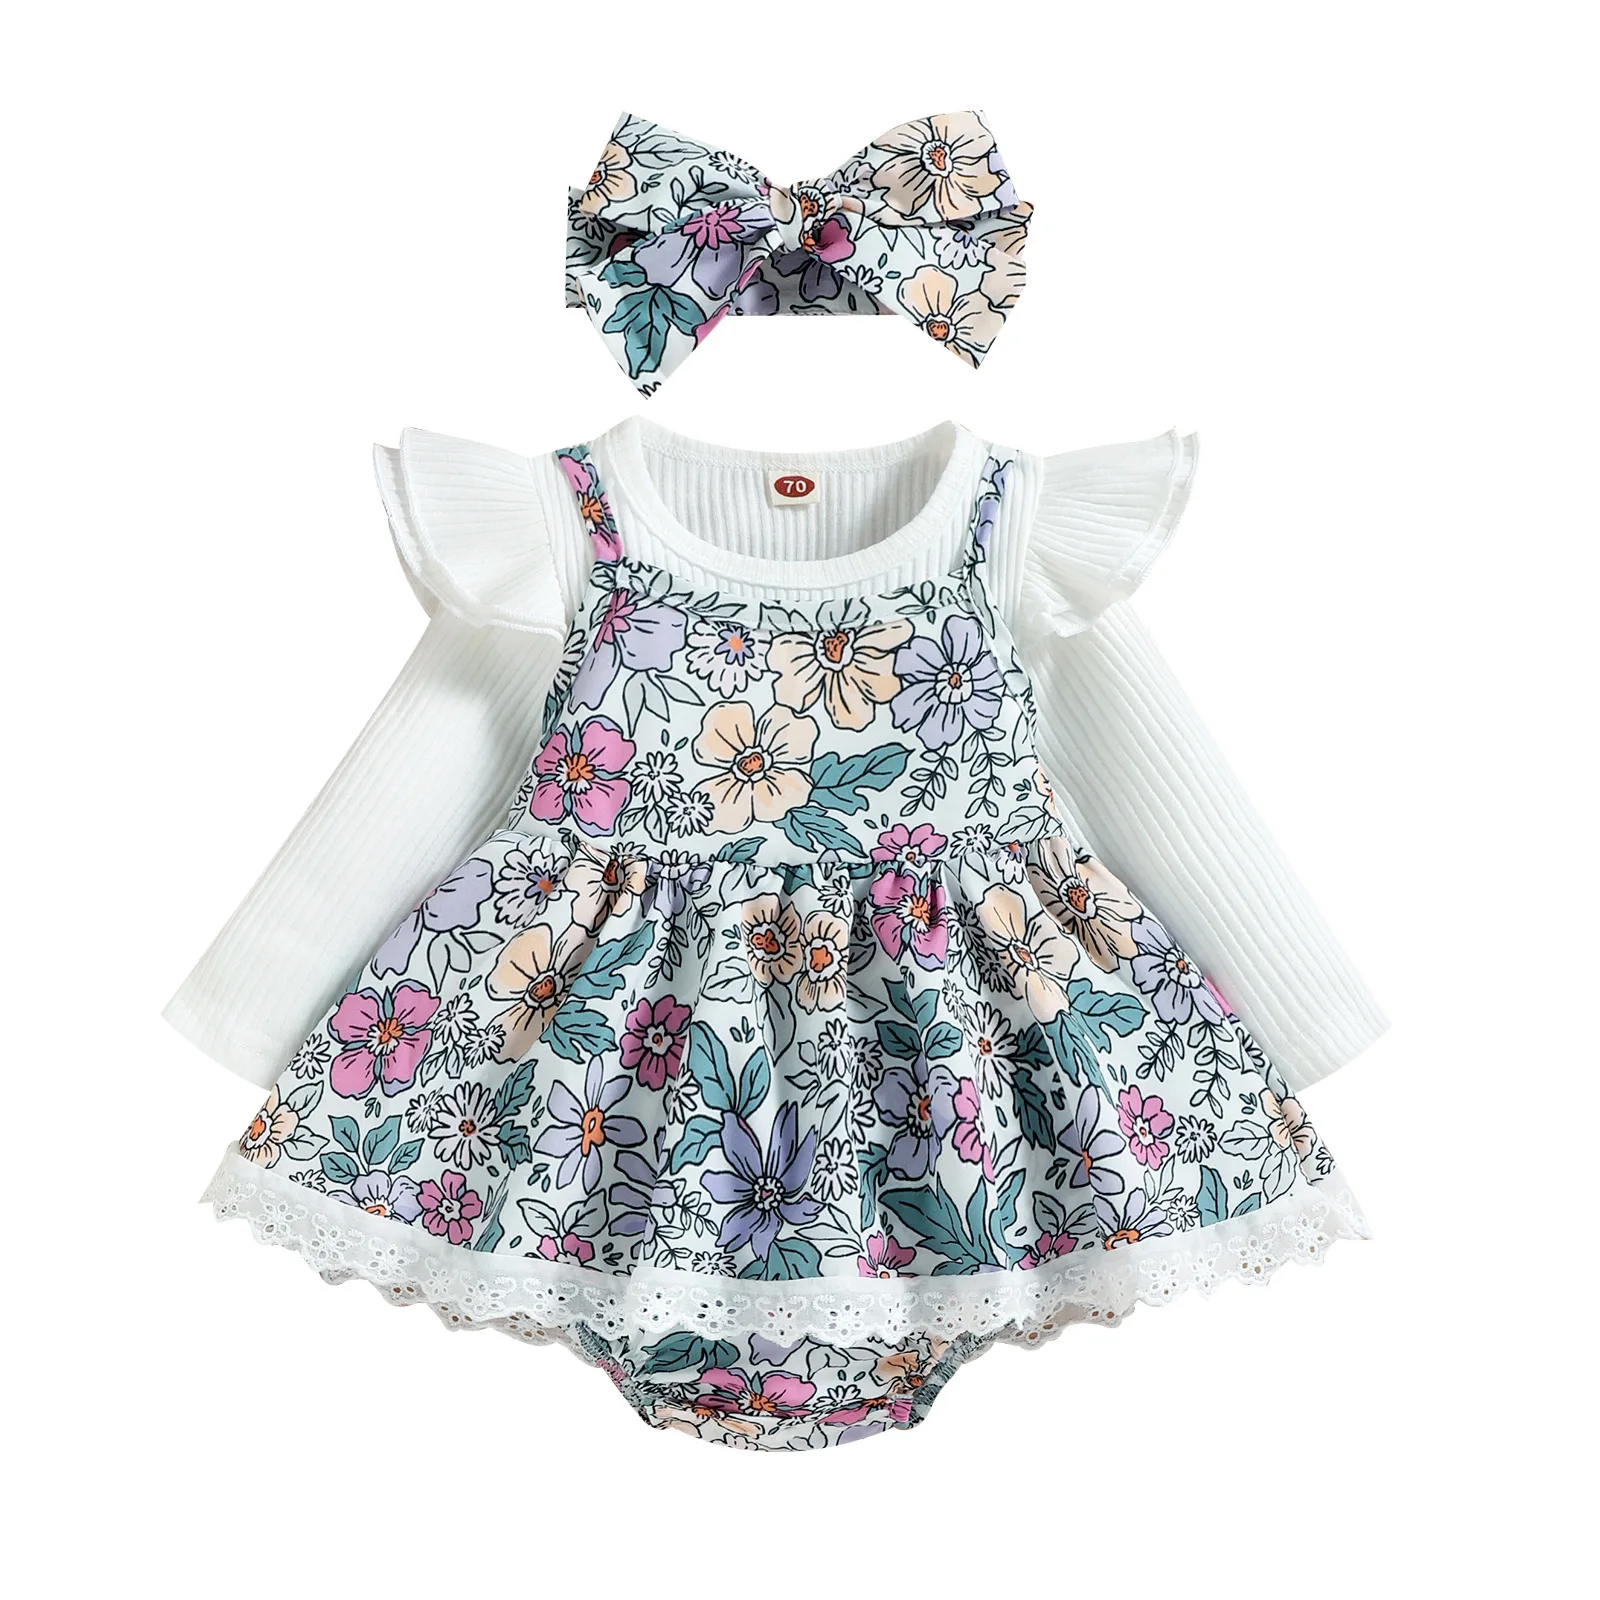 2022 Newborn Girl Autumn Clothes Floral Print Baby Set 3Pcs Long-Sleeved White Tops+Lace Dress Bodysuit+Headband Infant Clothing